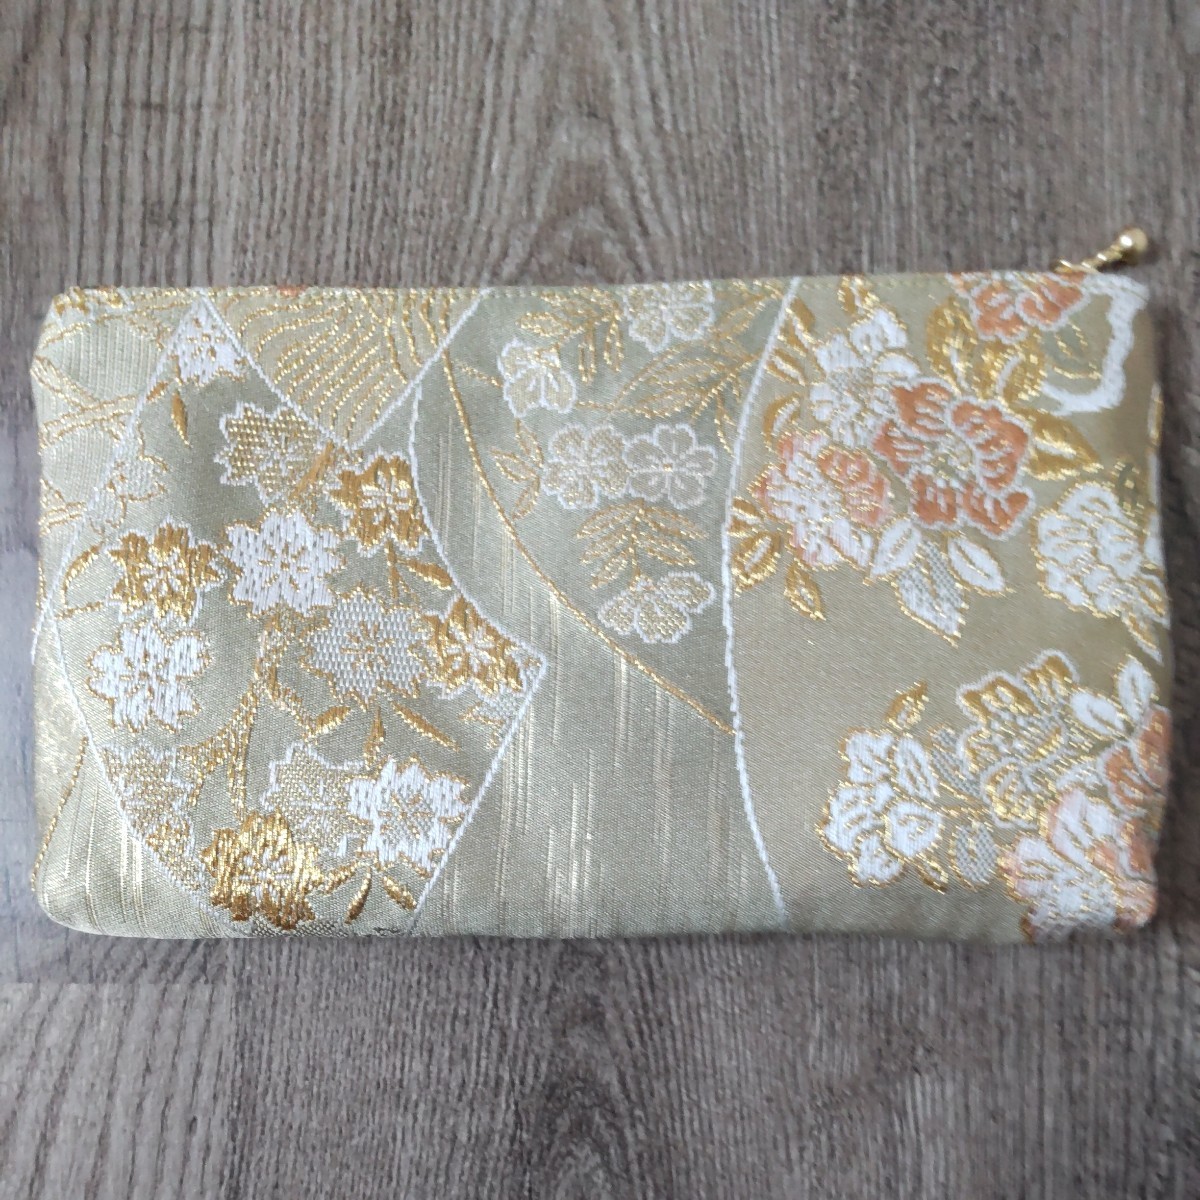  банковская книжка сумка [.*heart] obi переделка кимоно сумка бардачок ручная работа земля бумага . цветок b